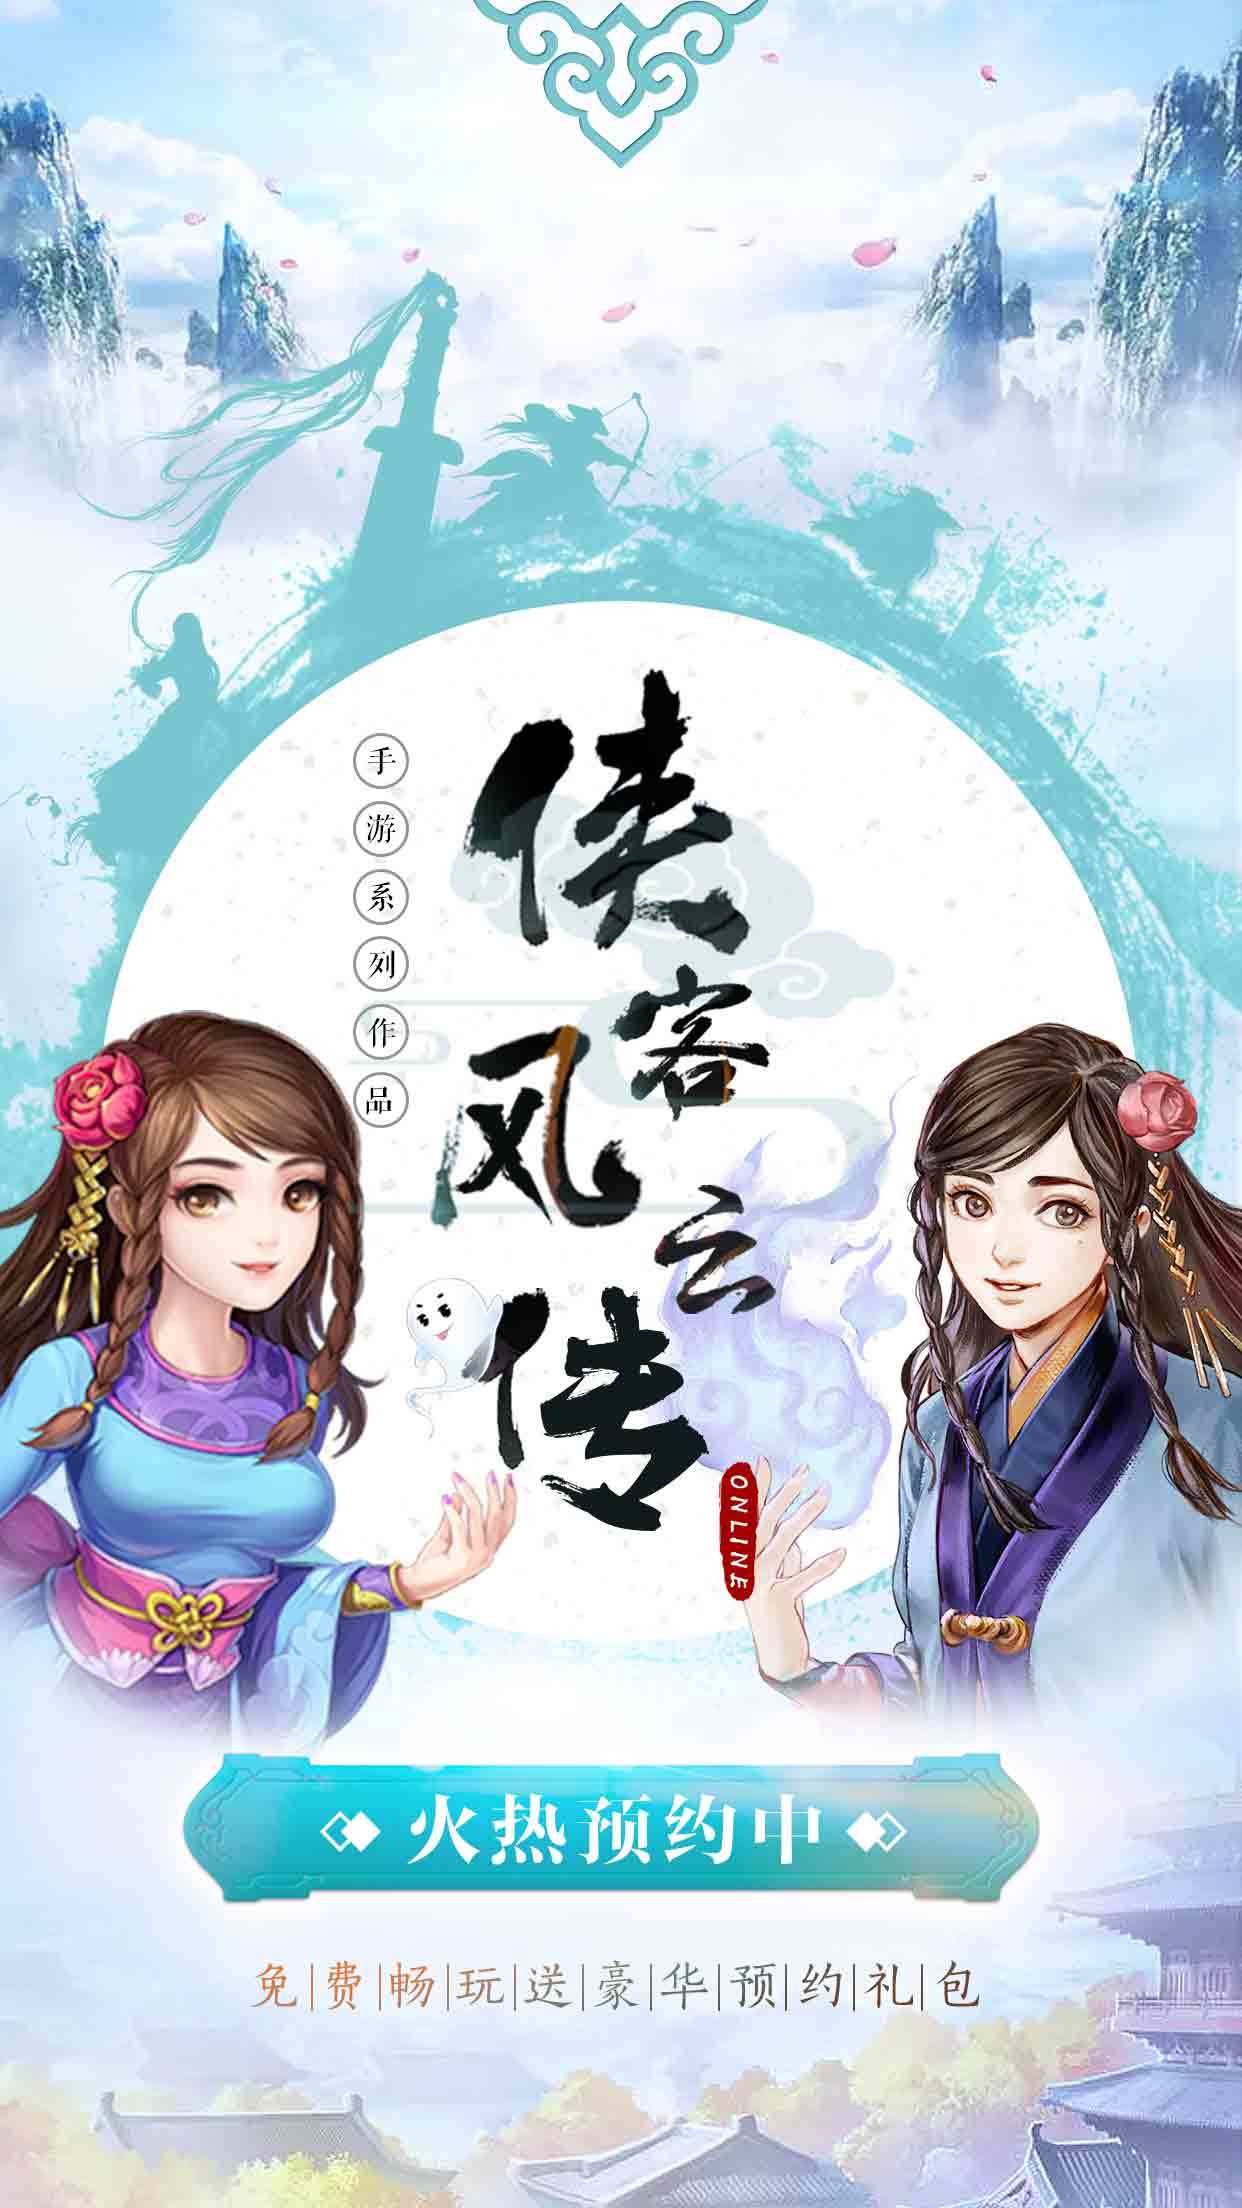 Screenshot 1 of Wuxia ပုံပြင် 